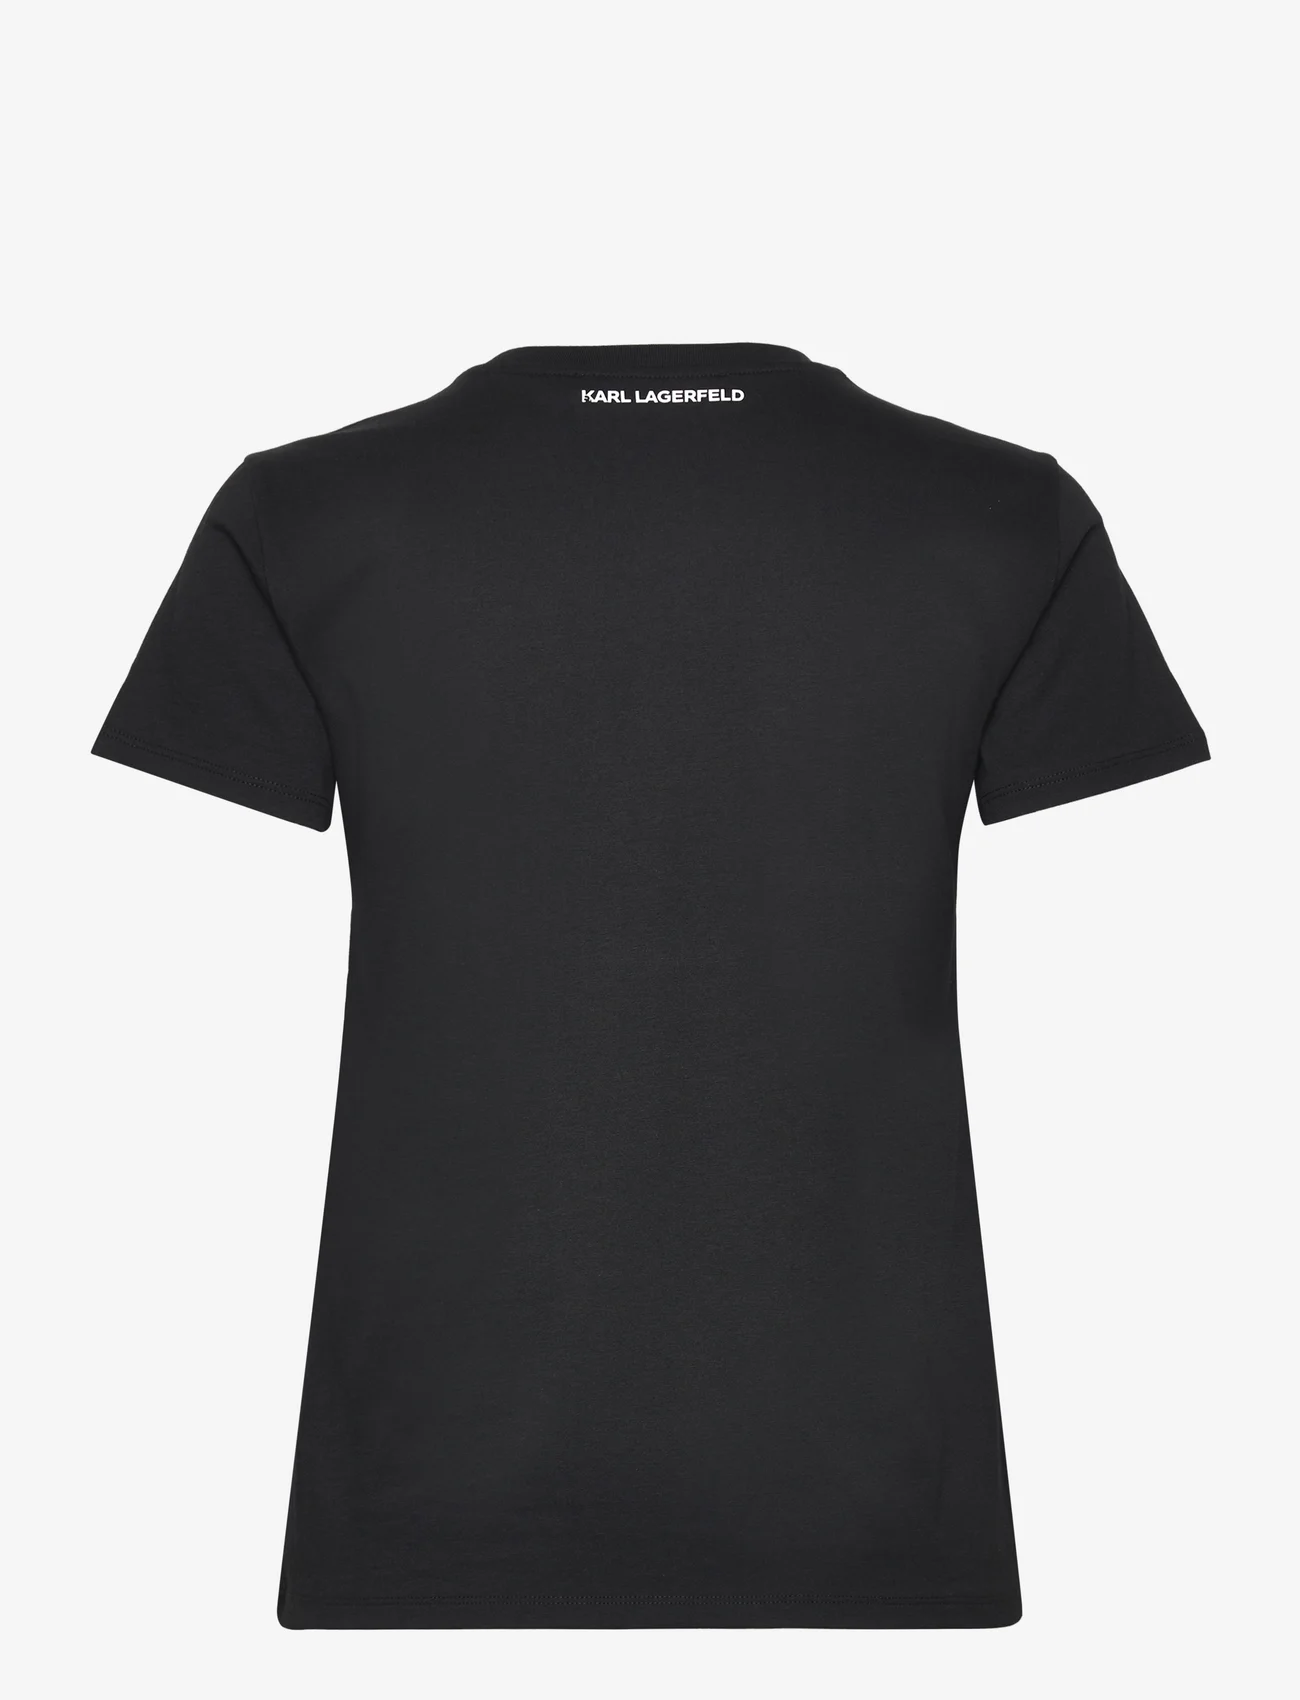 Karl Lagerfeld - boucle choupette t-shirt - black - 1